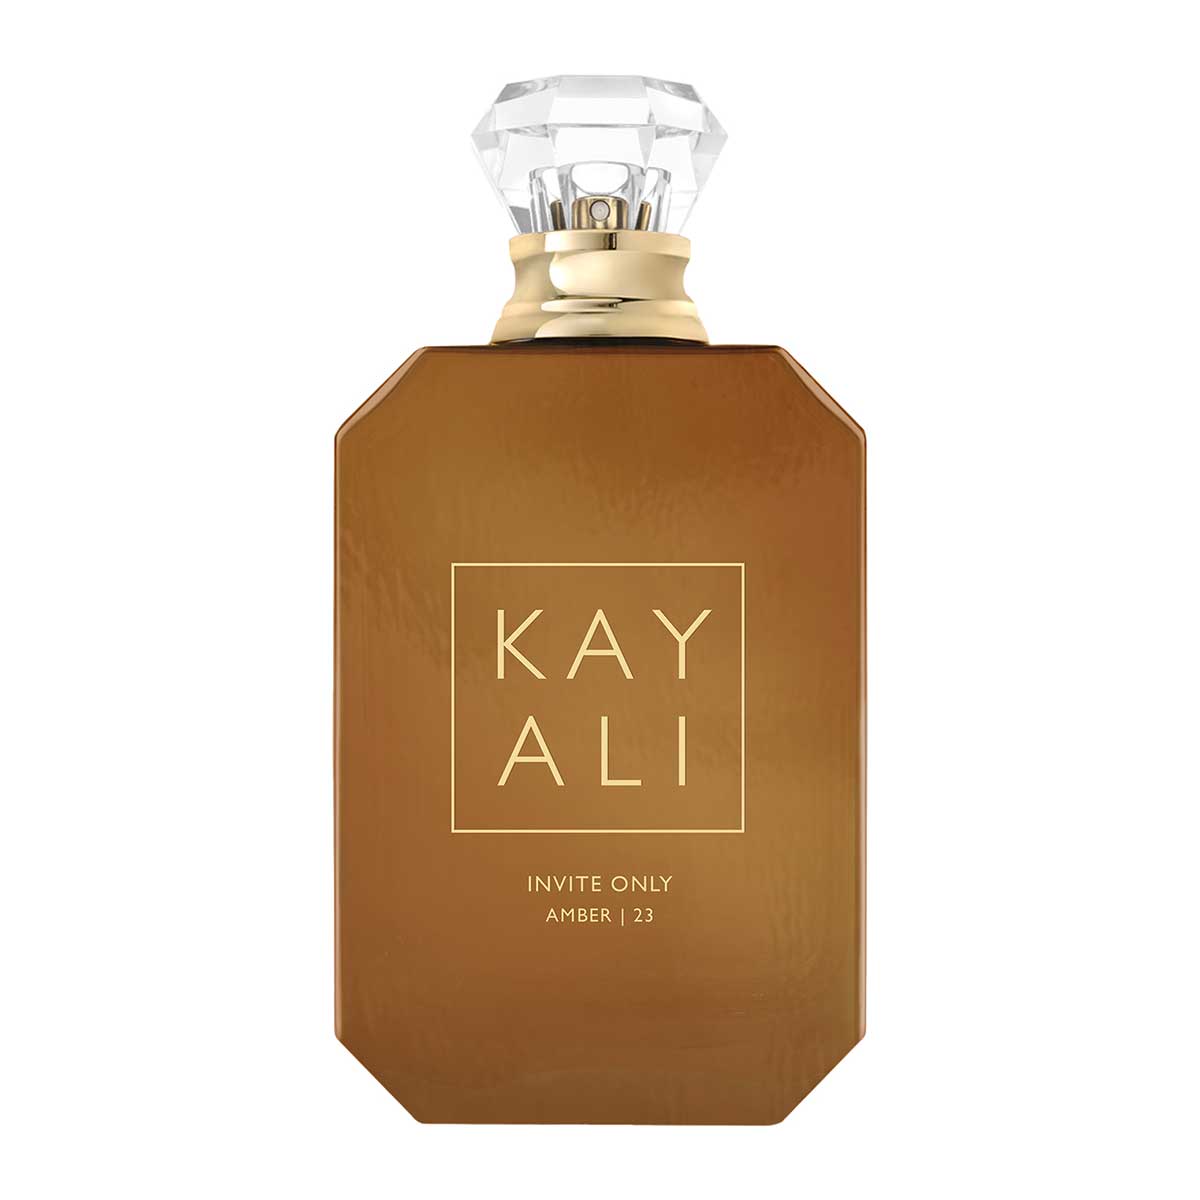 kayali invite only amber | 23 eau de parfum intense 100ml